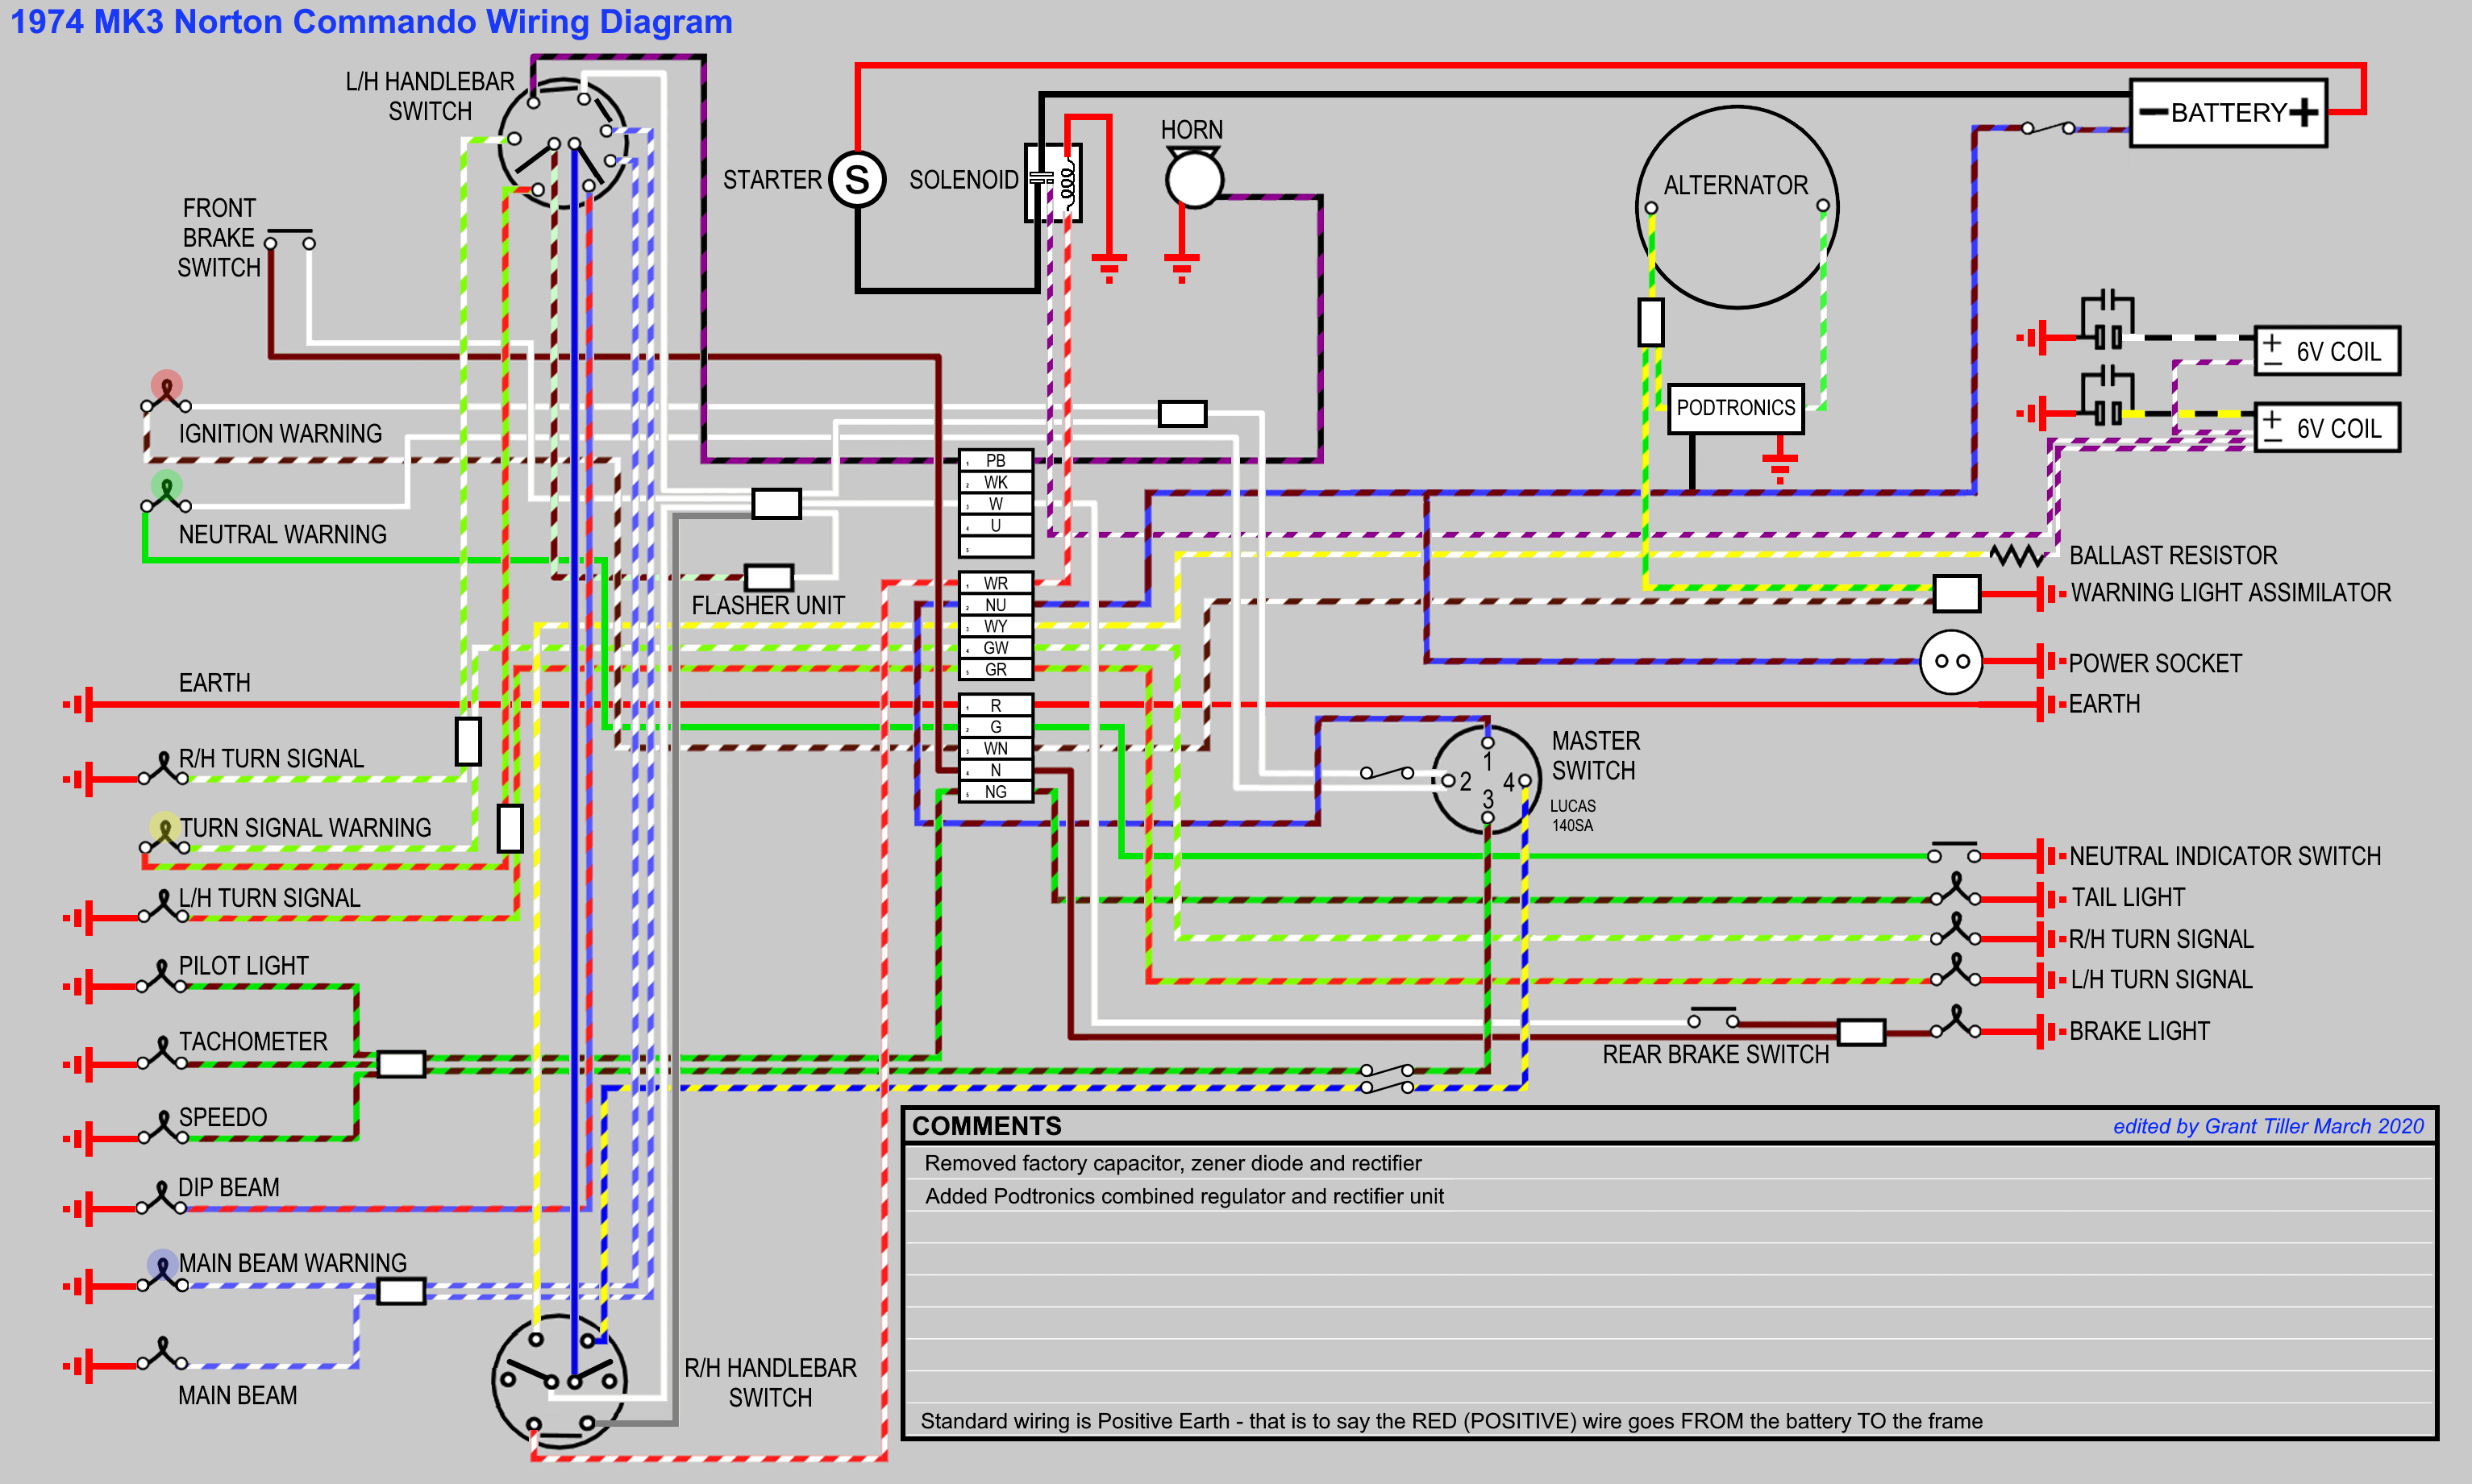 Norton Commando Wiring Diagram + Podtronics